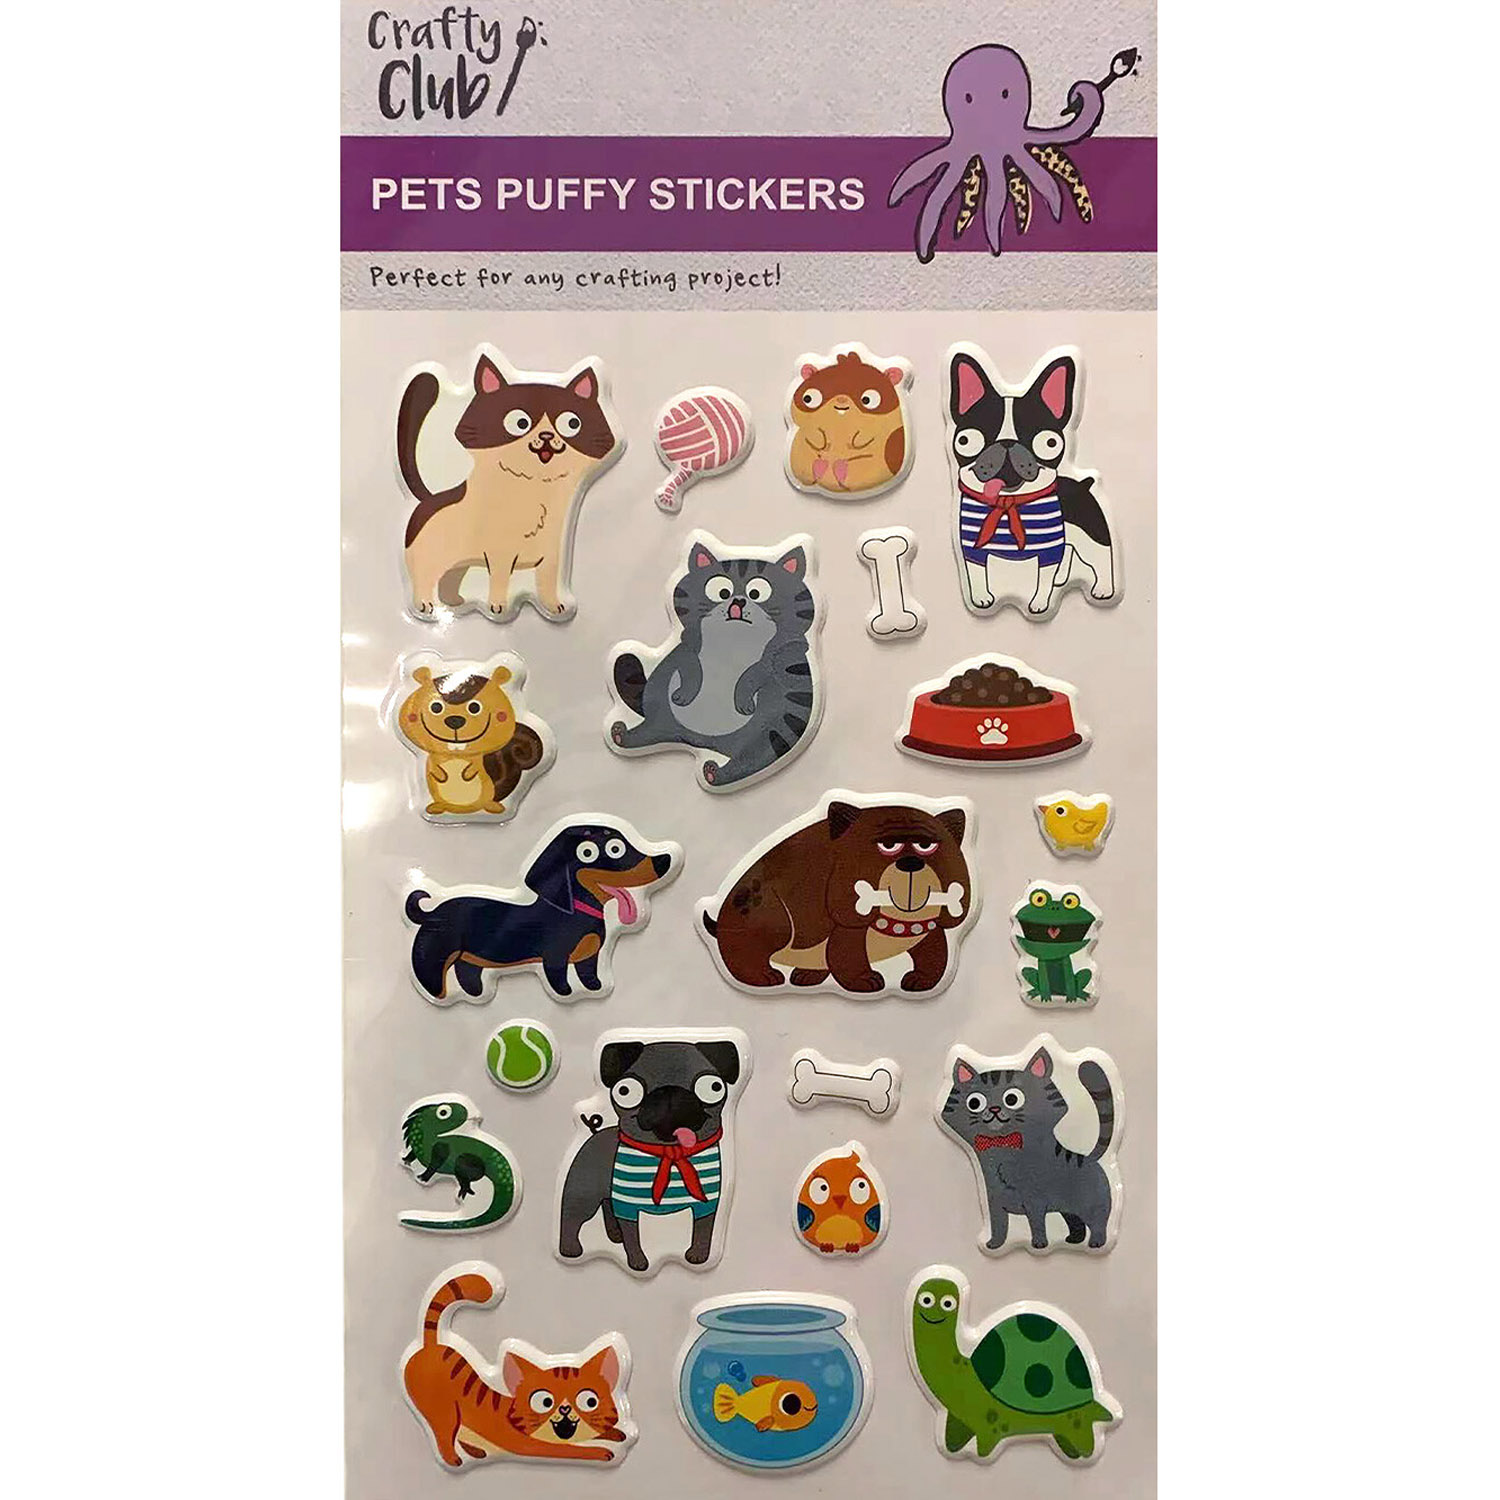 Crafty Club Pets Puffy Stickers Image